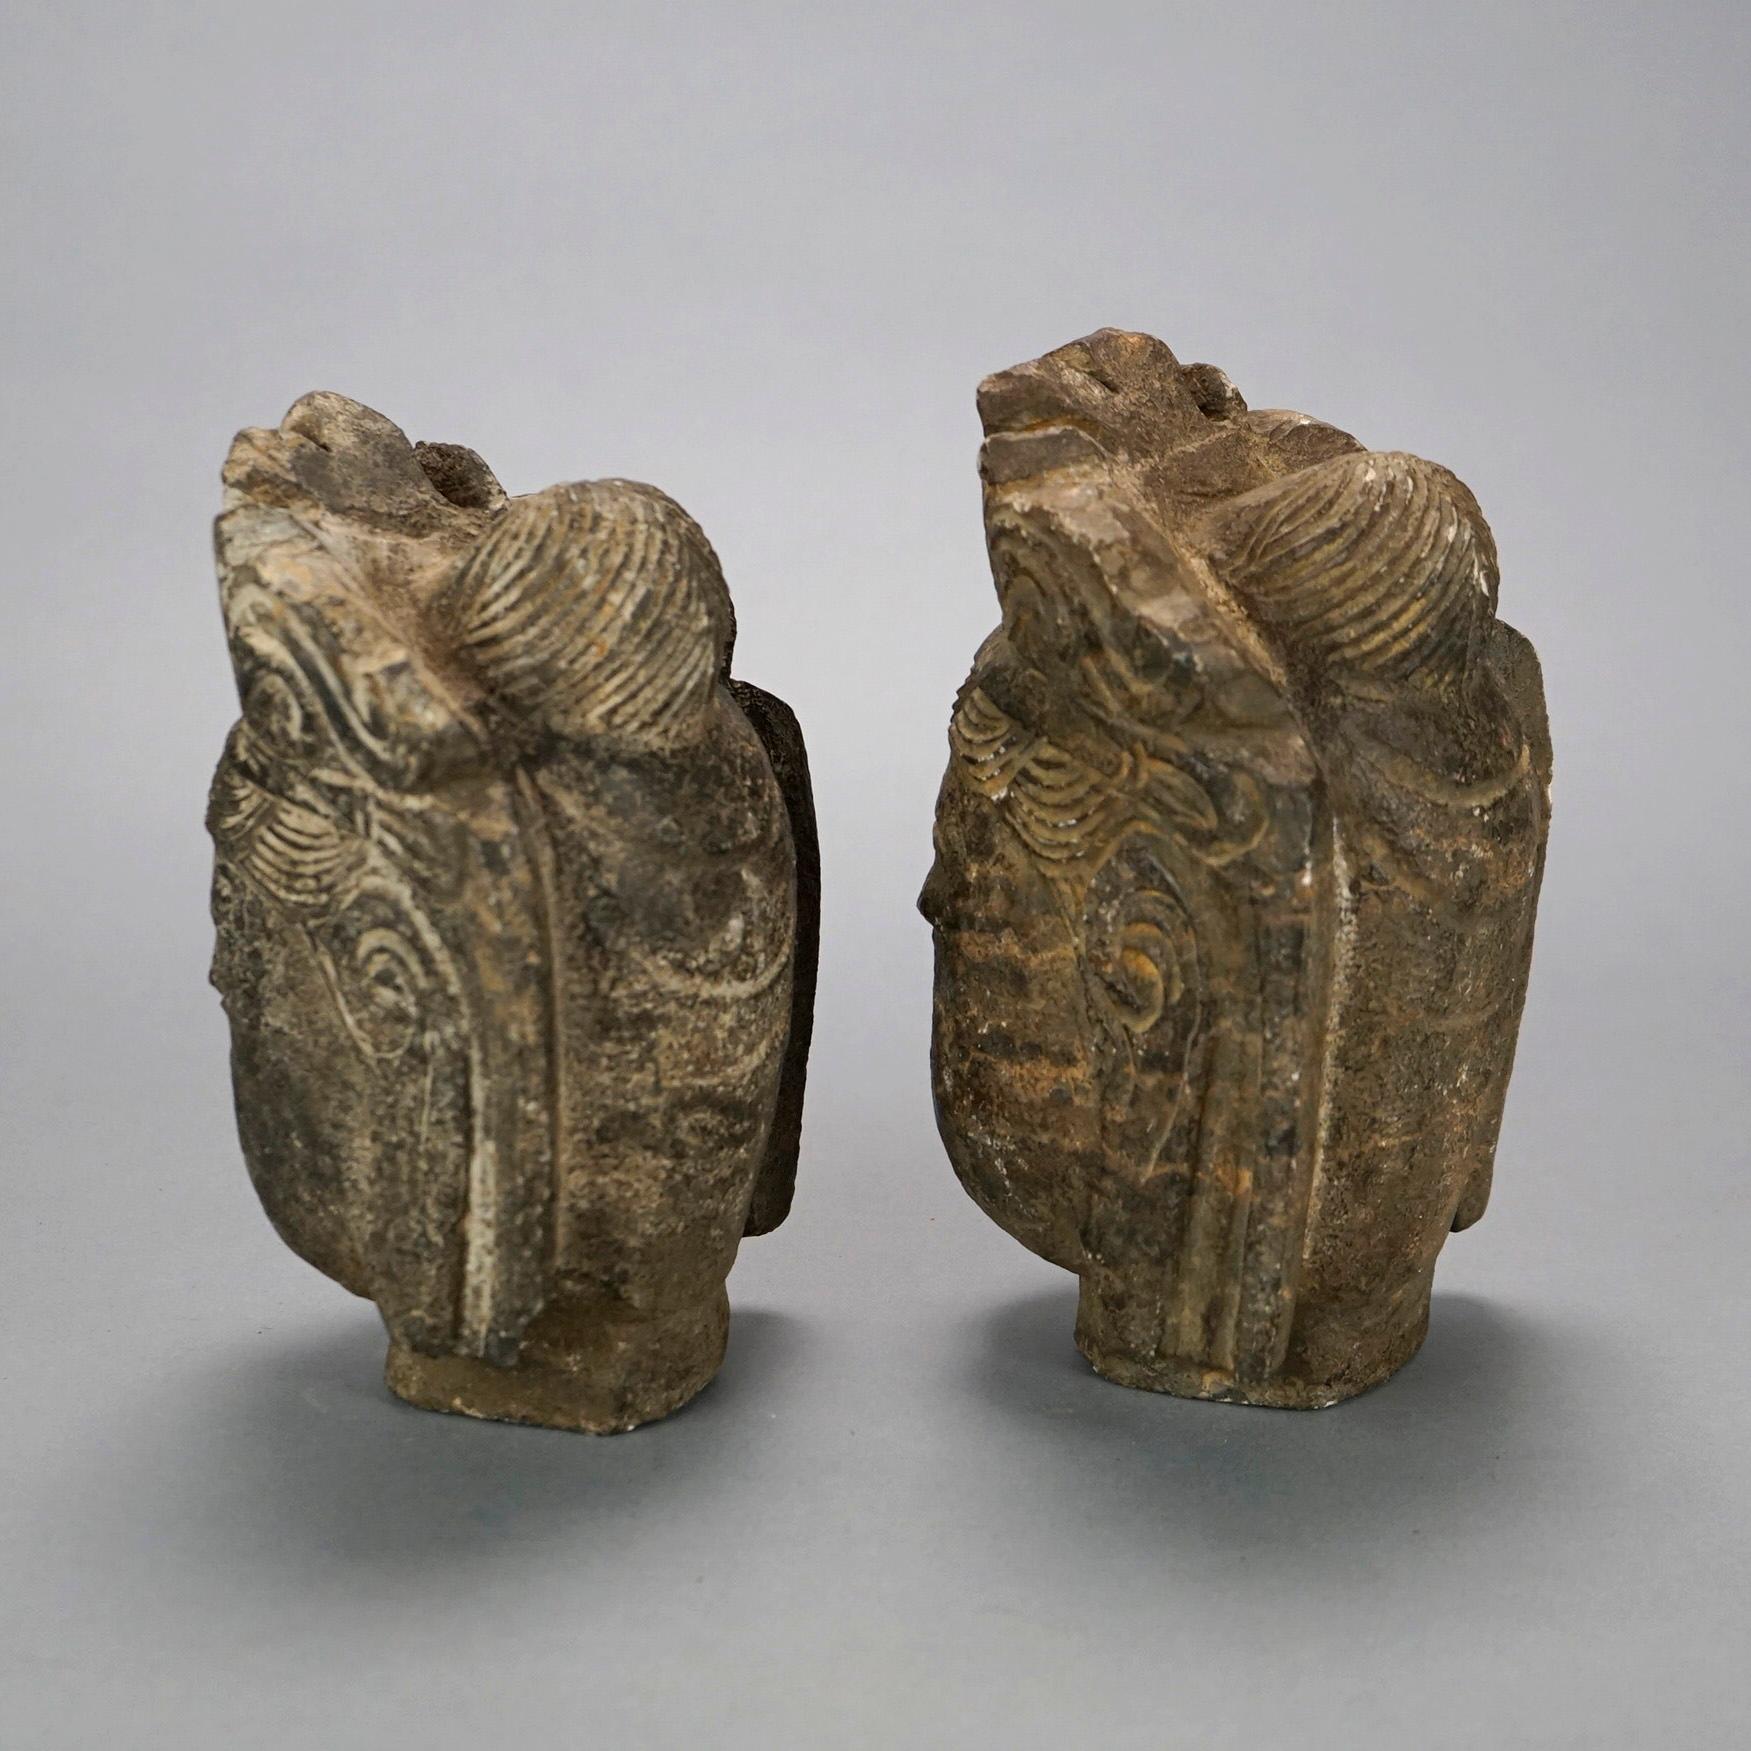 20th Century Chinese Cast Hardstone Buddha Busts, 20th C